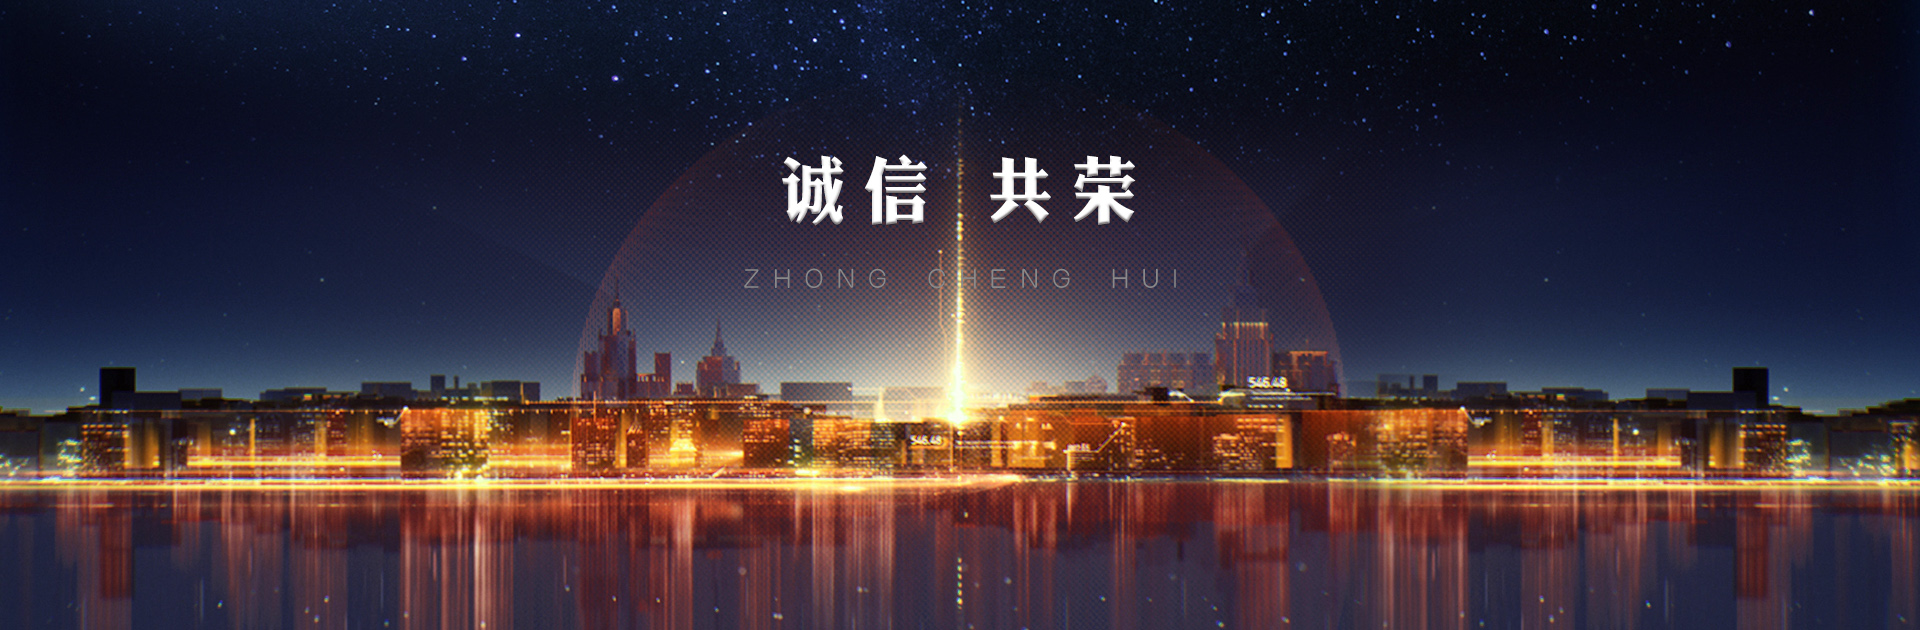 HTH华体会·(中国)官方网站